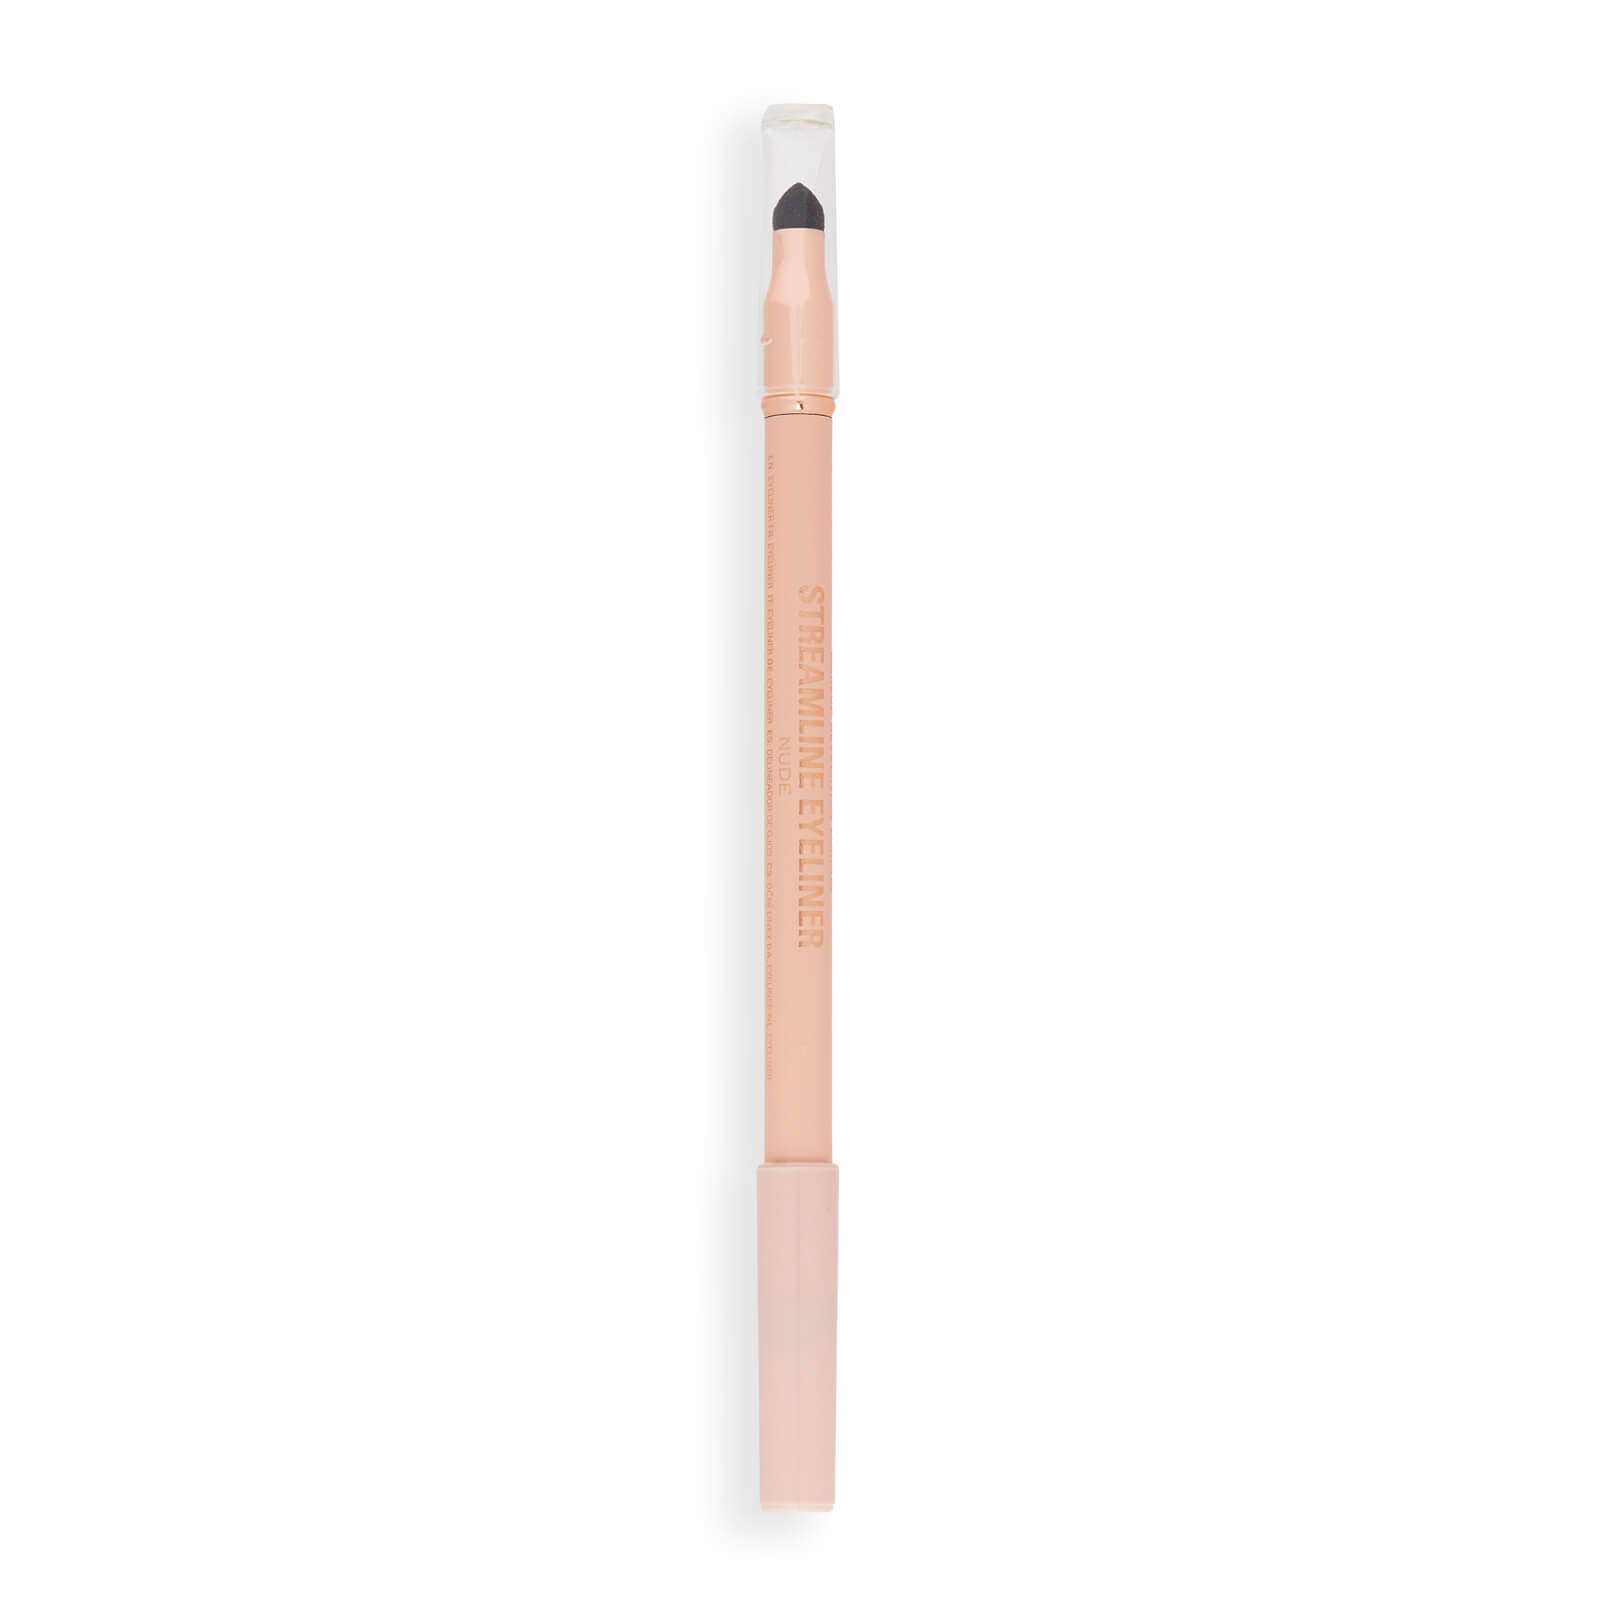 Makeup Revolution Streamline Waterline Eyeliner Pencil (Various Shades) - Nude